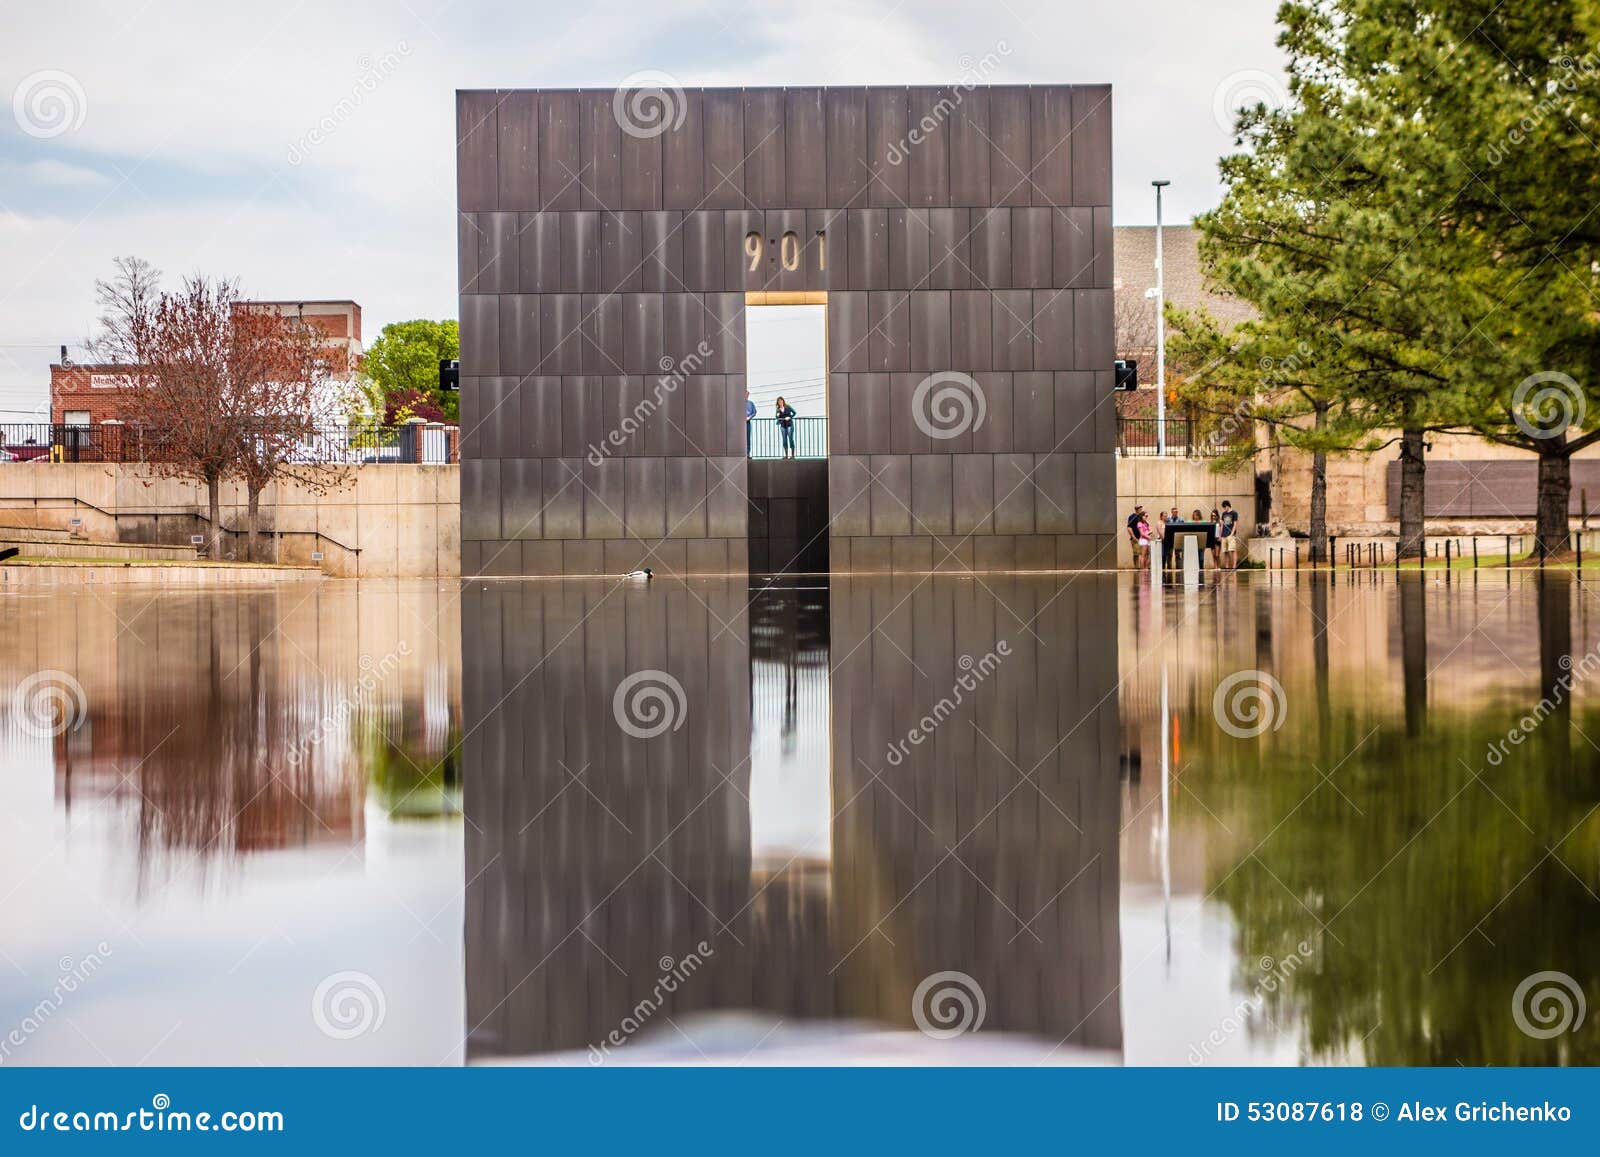 oklahoma city bombing memorial